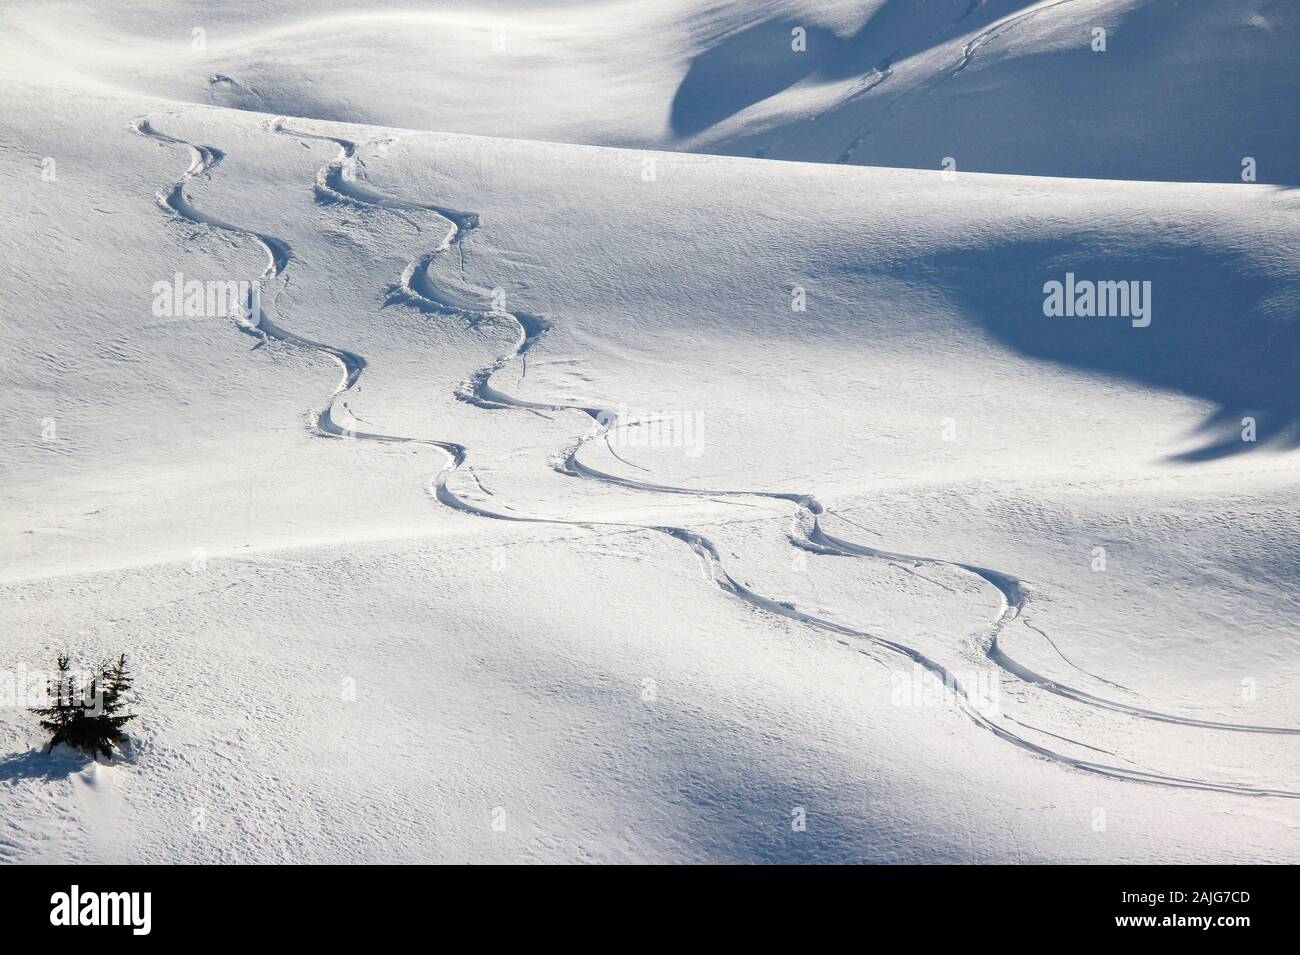 Italian Alps, snowy scenery: Twin snowboard trails carved in fresh snow. Christmas background. Free ride ski, freeride Stock Photo